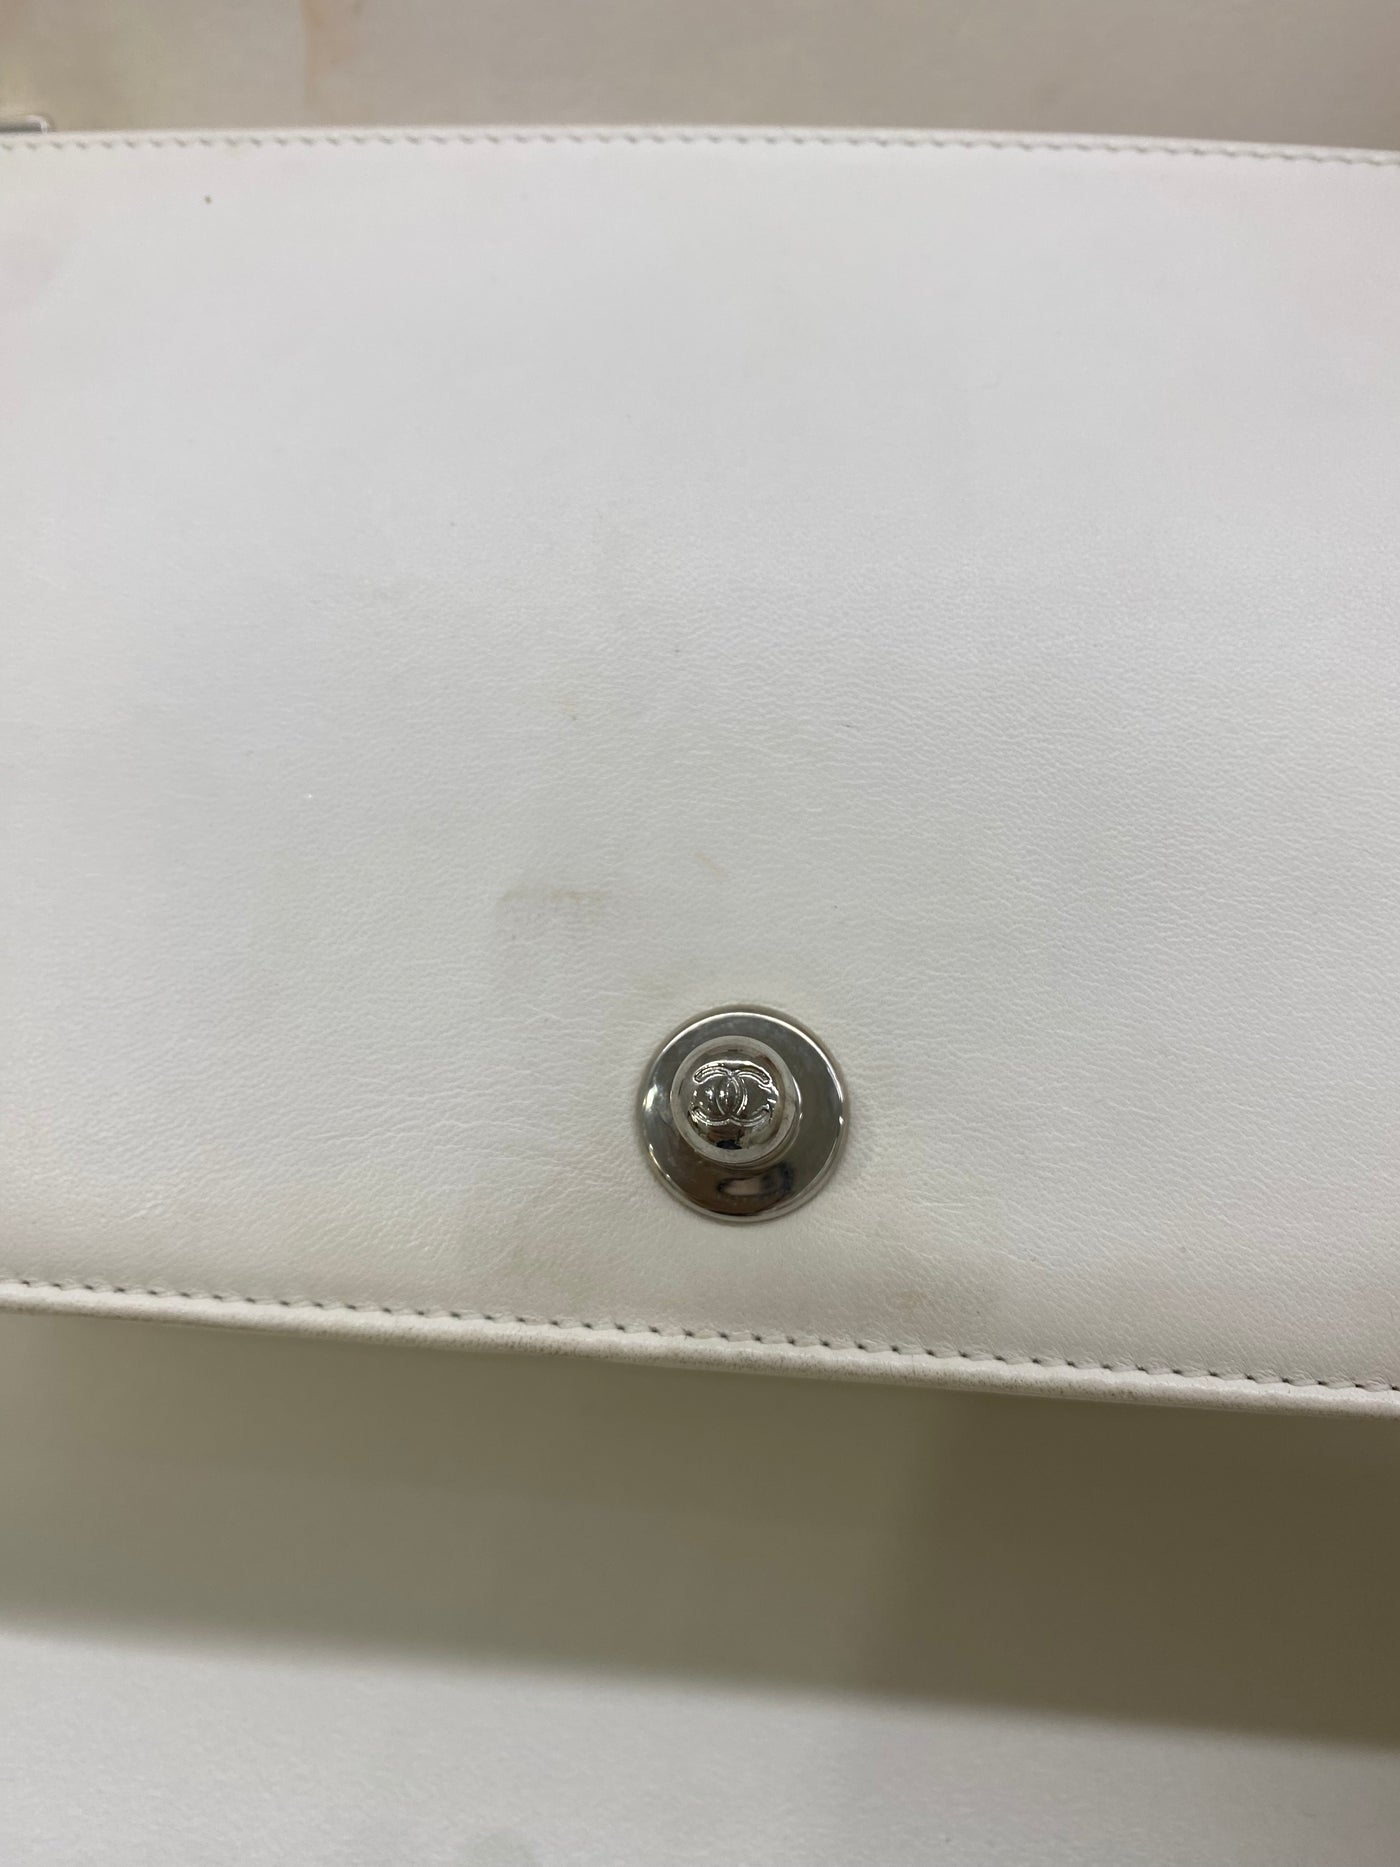 Chanel Boy Bag Medium - Off White Sequins SHW (series 24)